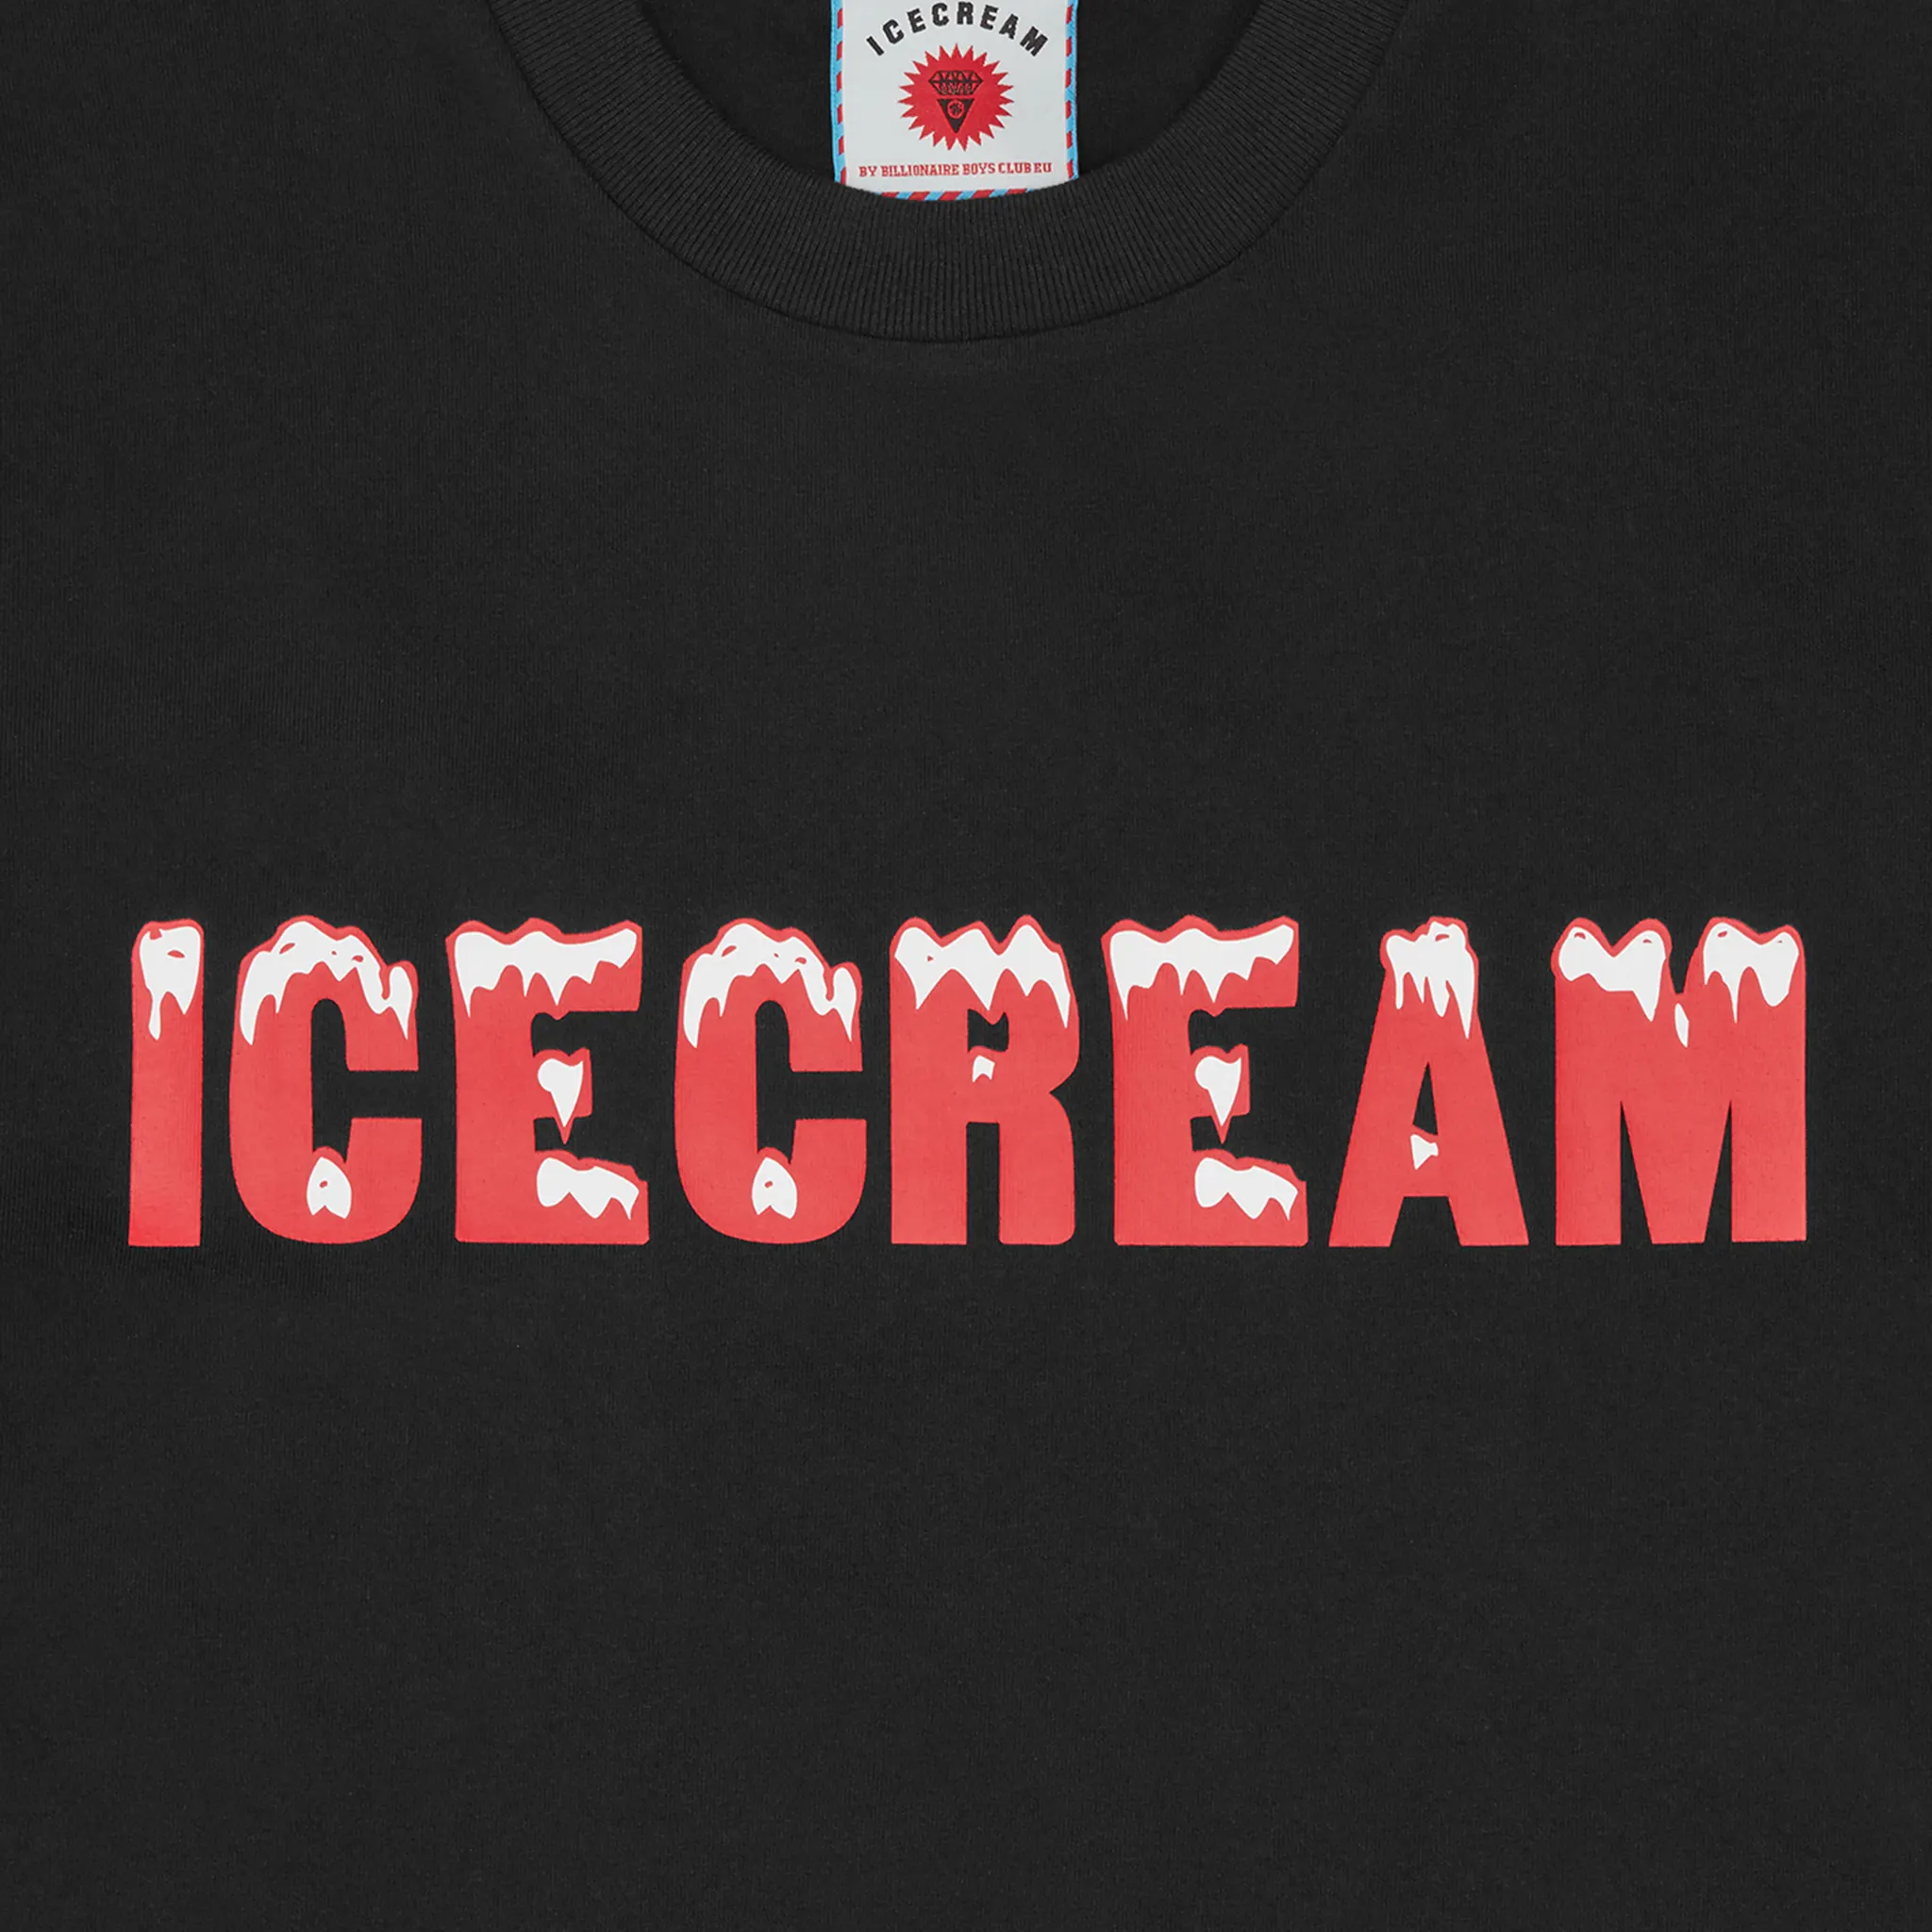 Detail view of Icecream IC Drippy Black T Shirt ic23439-blk